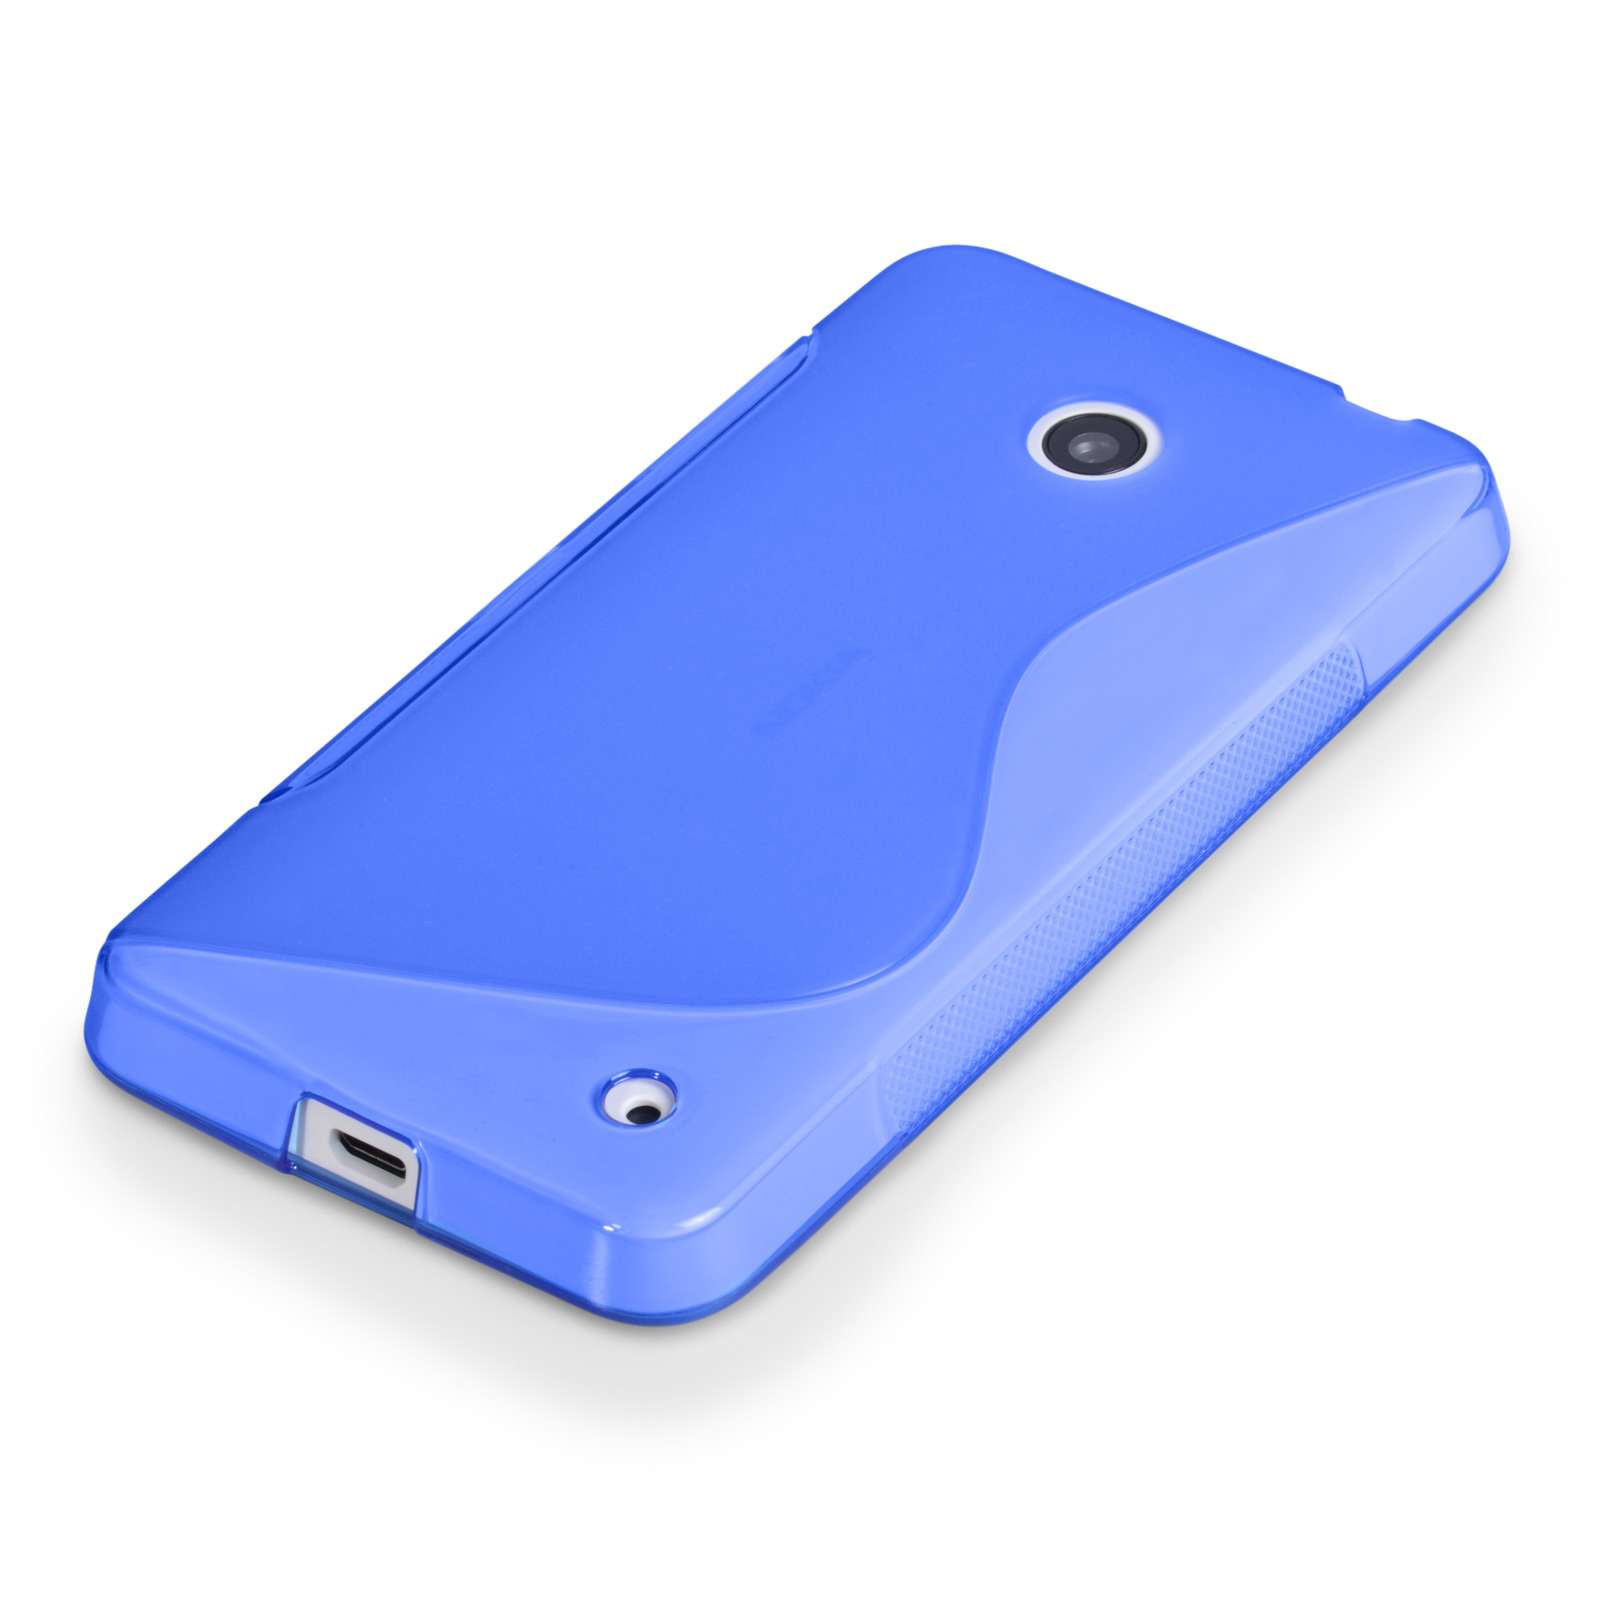 Caseflex Nokia Lumia 630 Silicone Gel S-Line Case - Blue